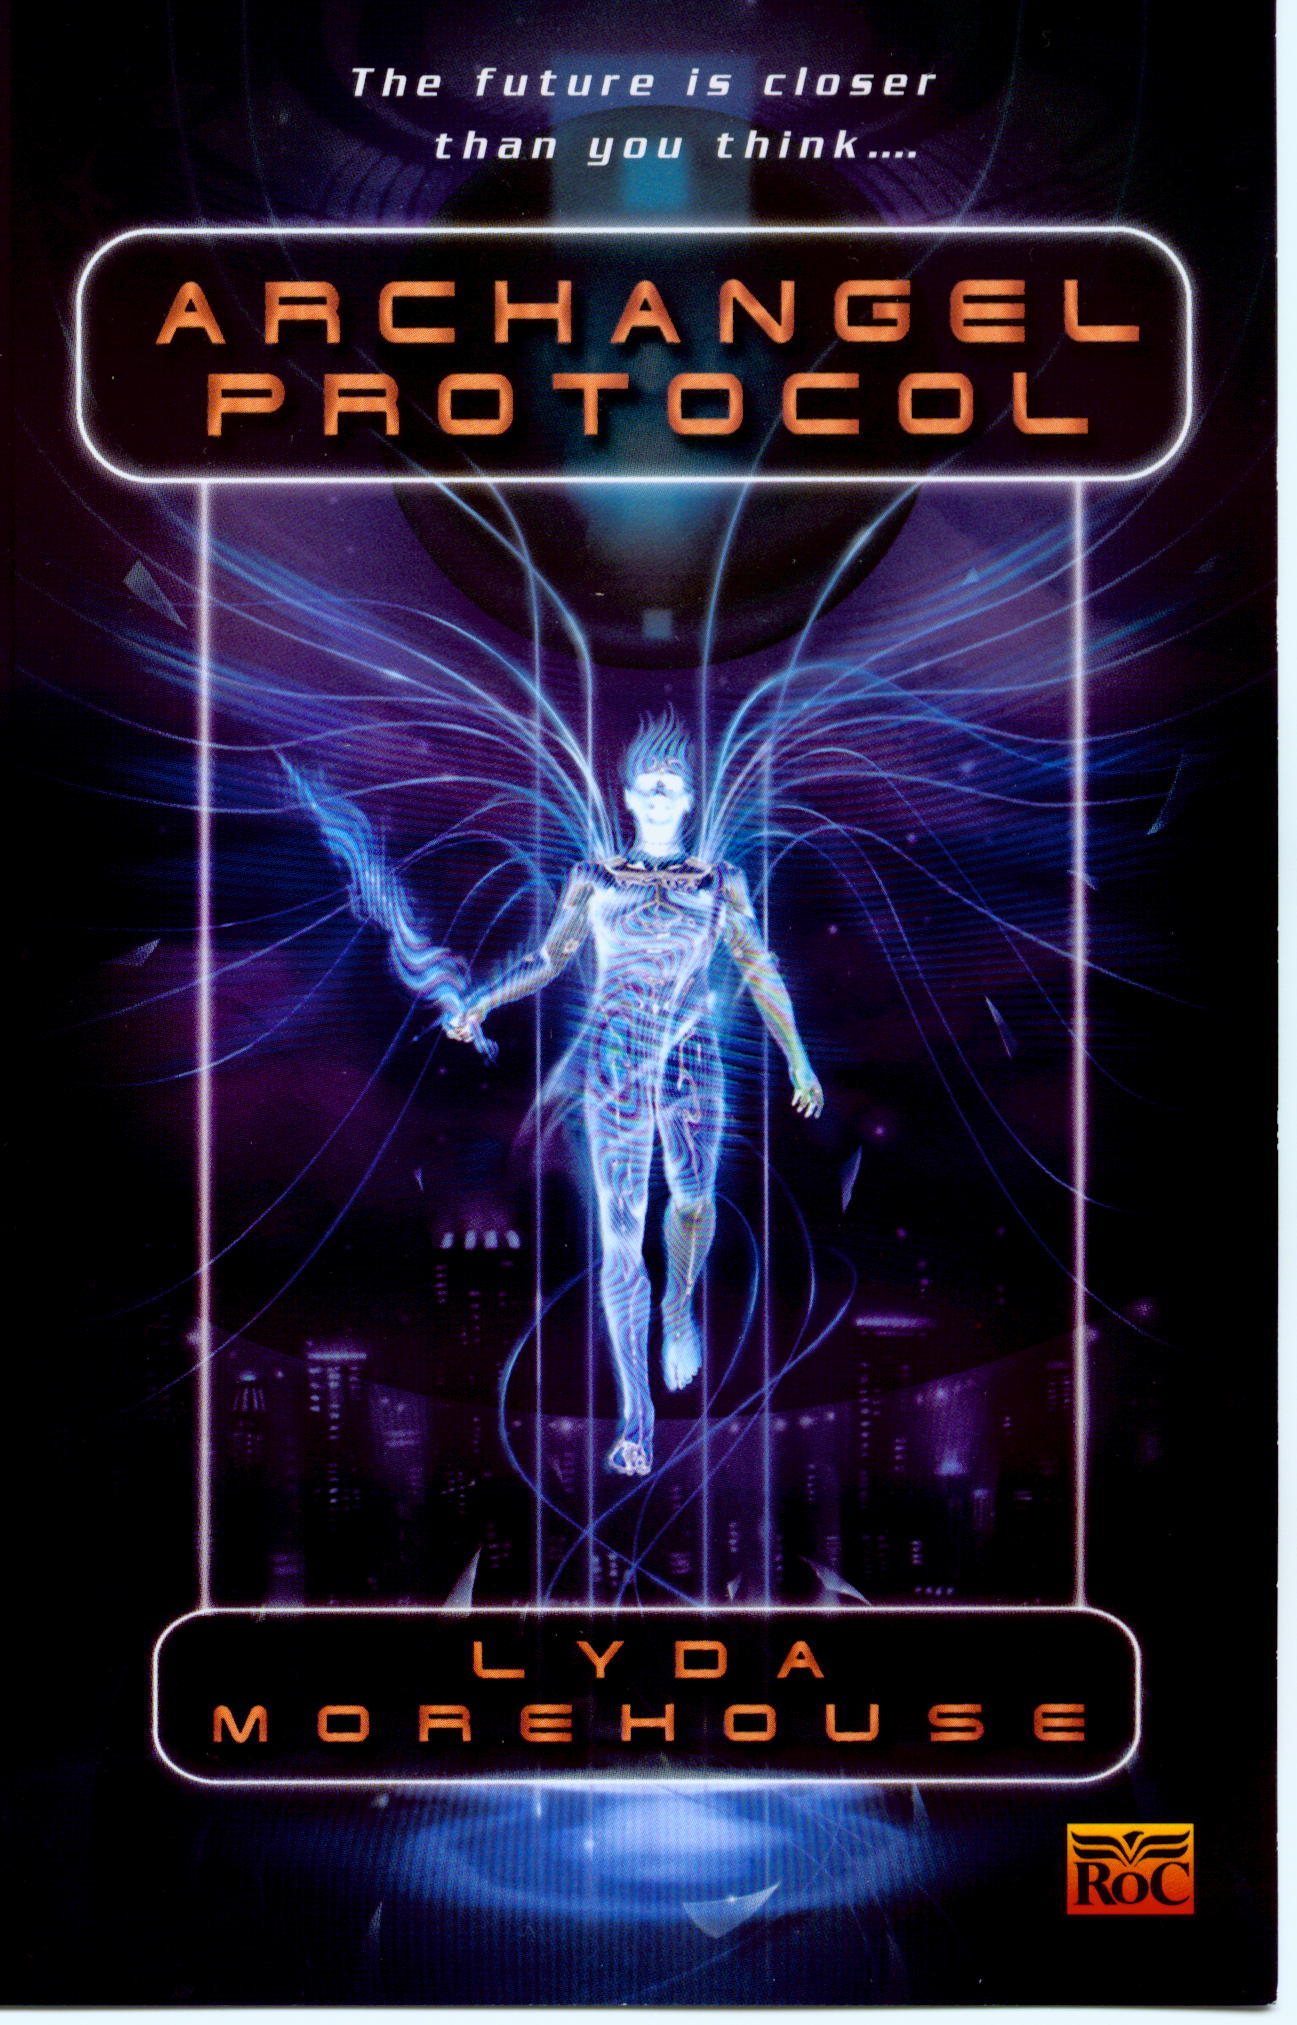 Archangel Protocol cover art by Bruce Jensen